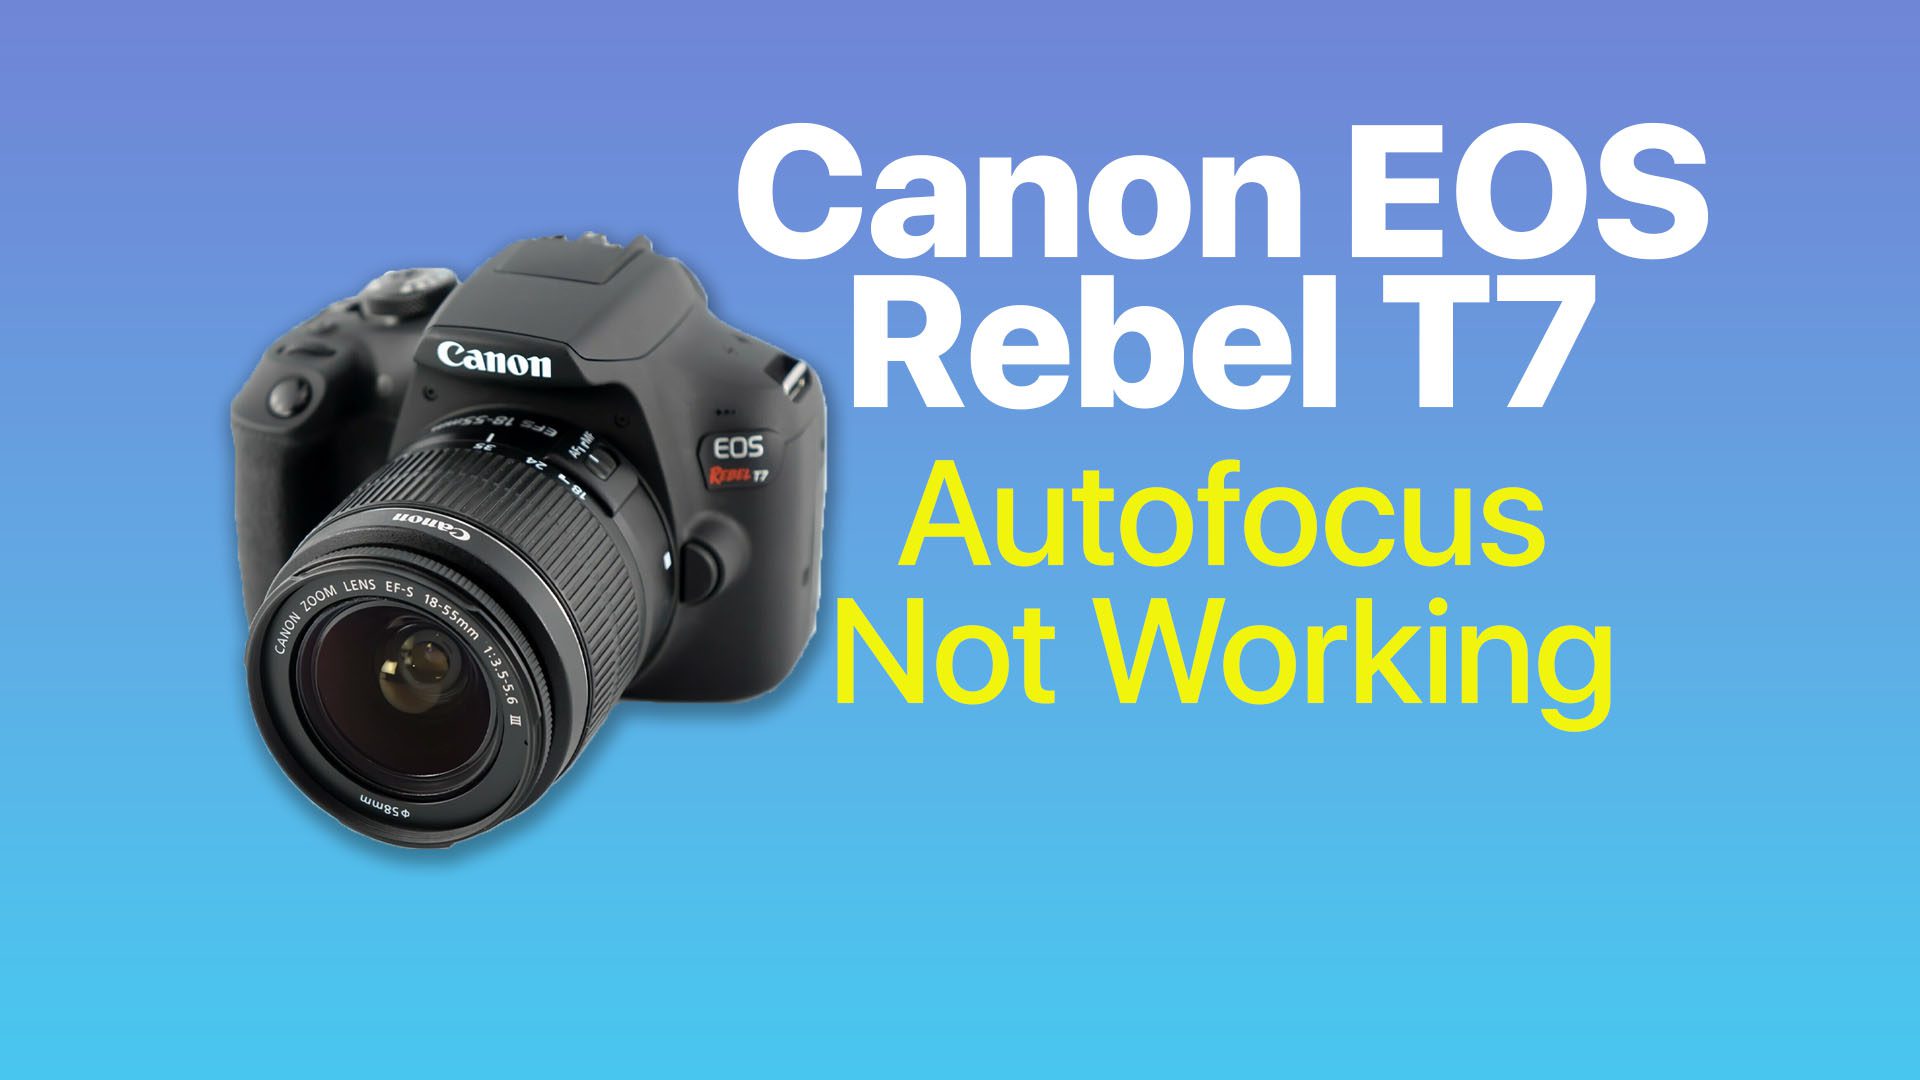 Canon EOS Rebel T7 DSLR Camera Autofocus Not Working Inaccurate